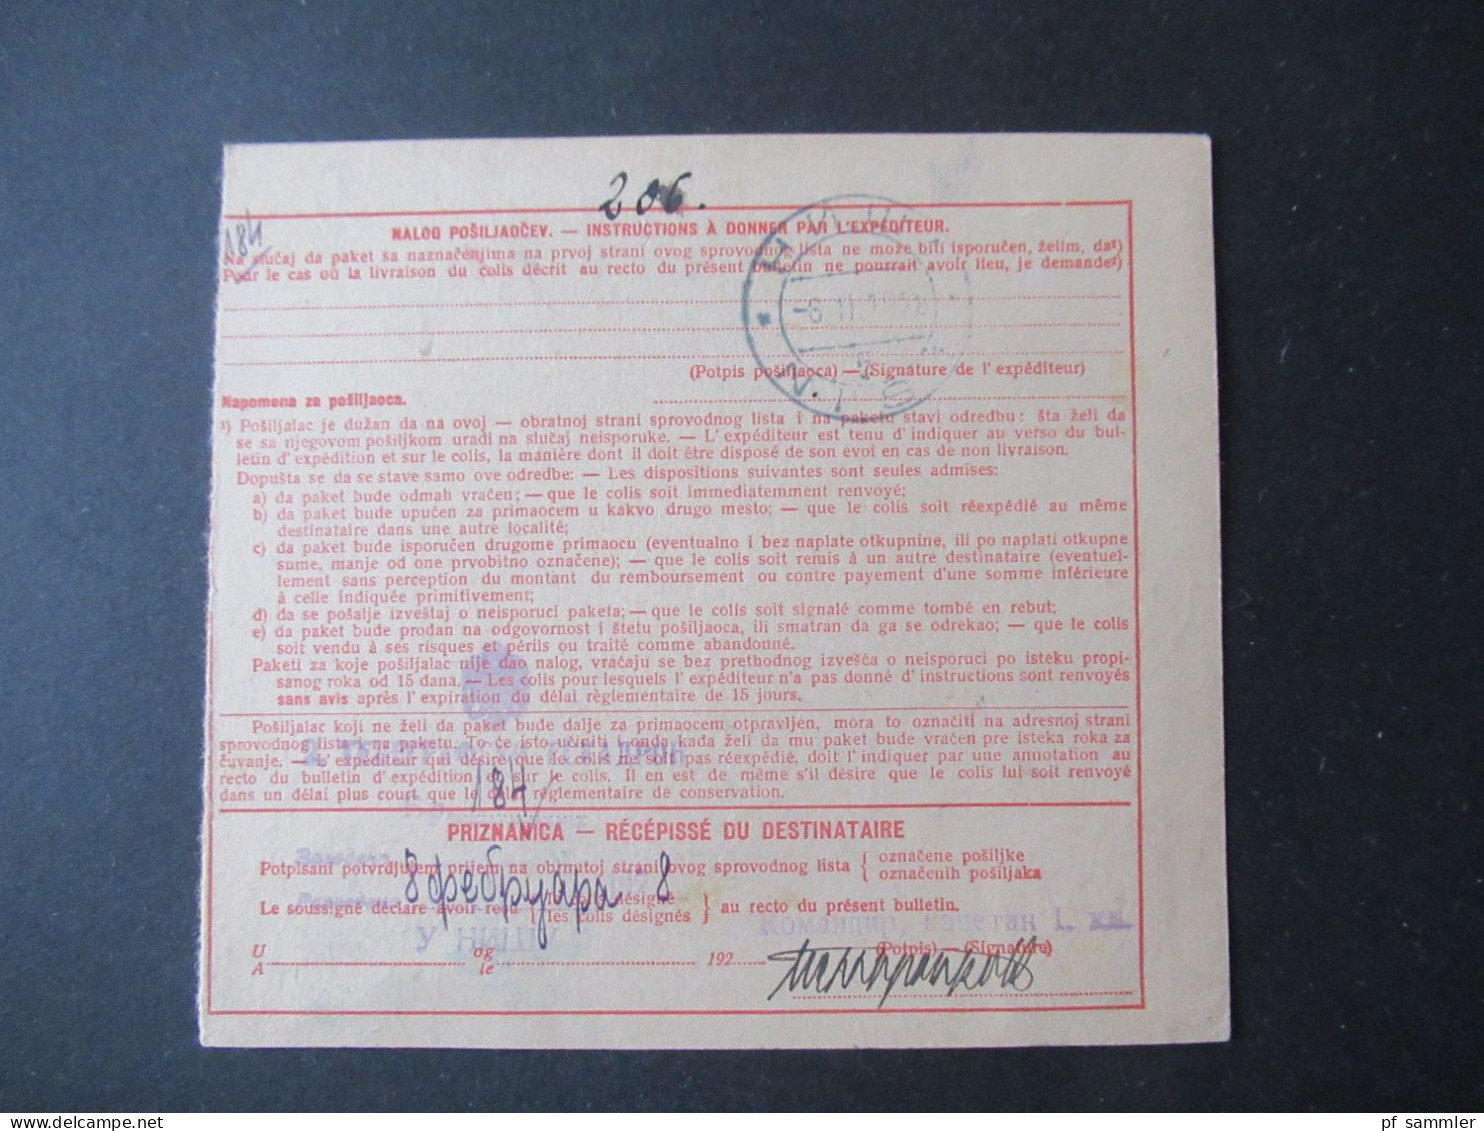 Jugoslawien 1928 Paketkarte Stempel Djakovo Nach Nis Serbien Gesendet Rückseitig Weitere Stempel - Lettres & Documents